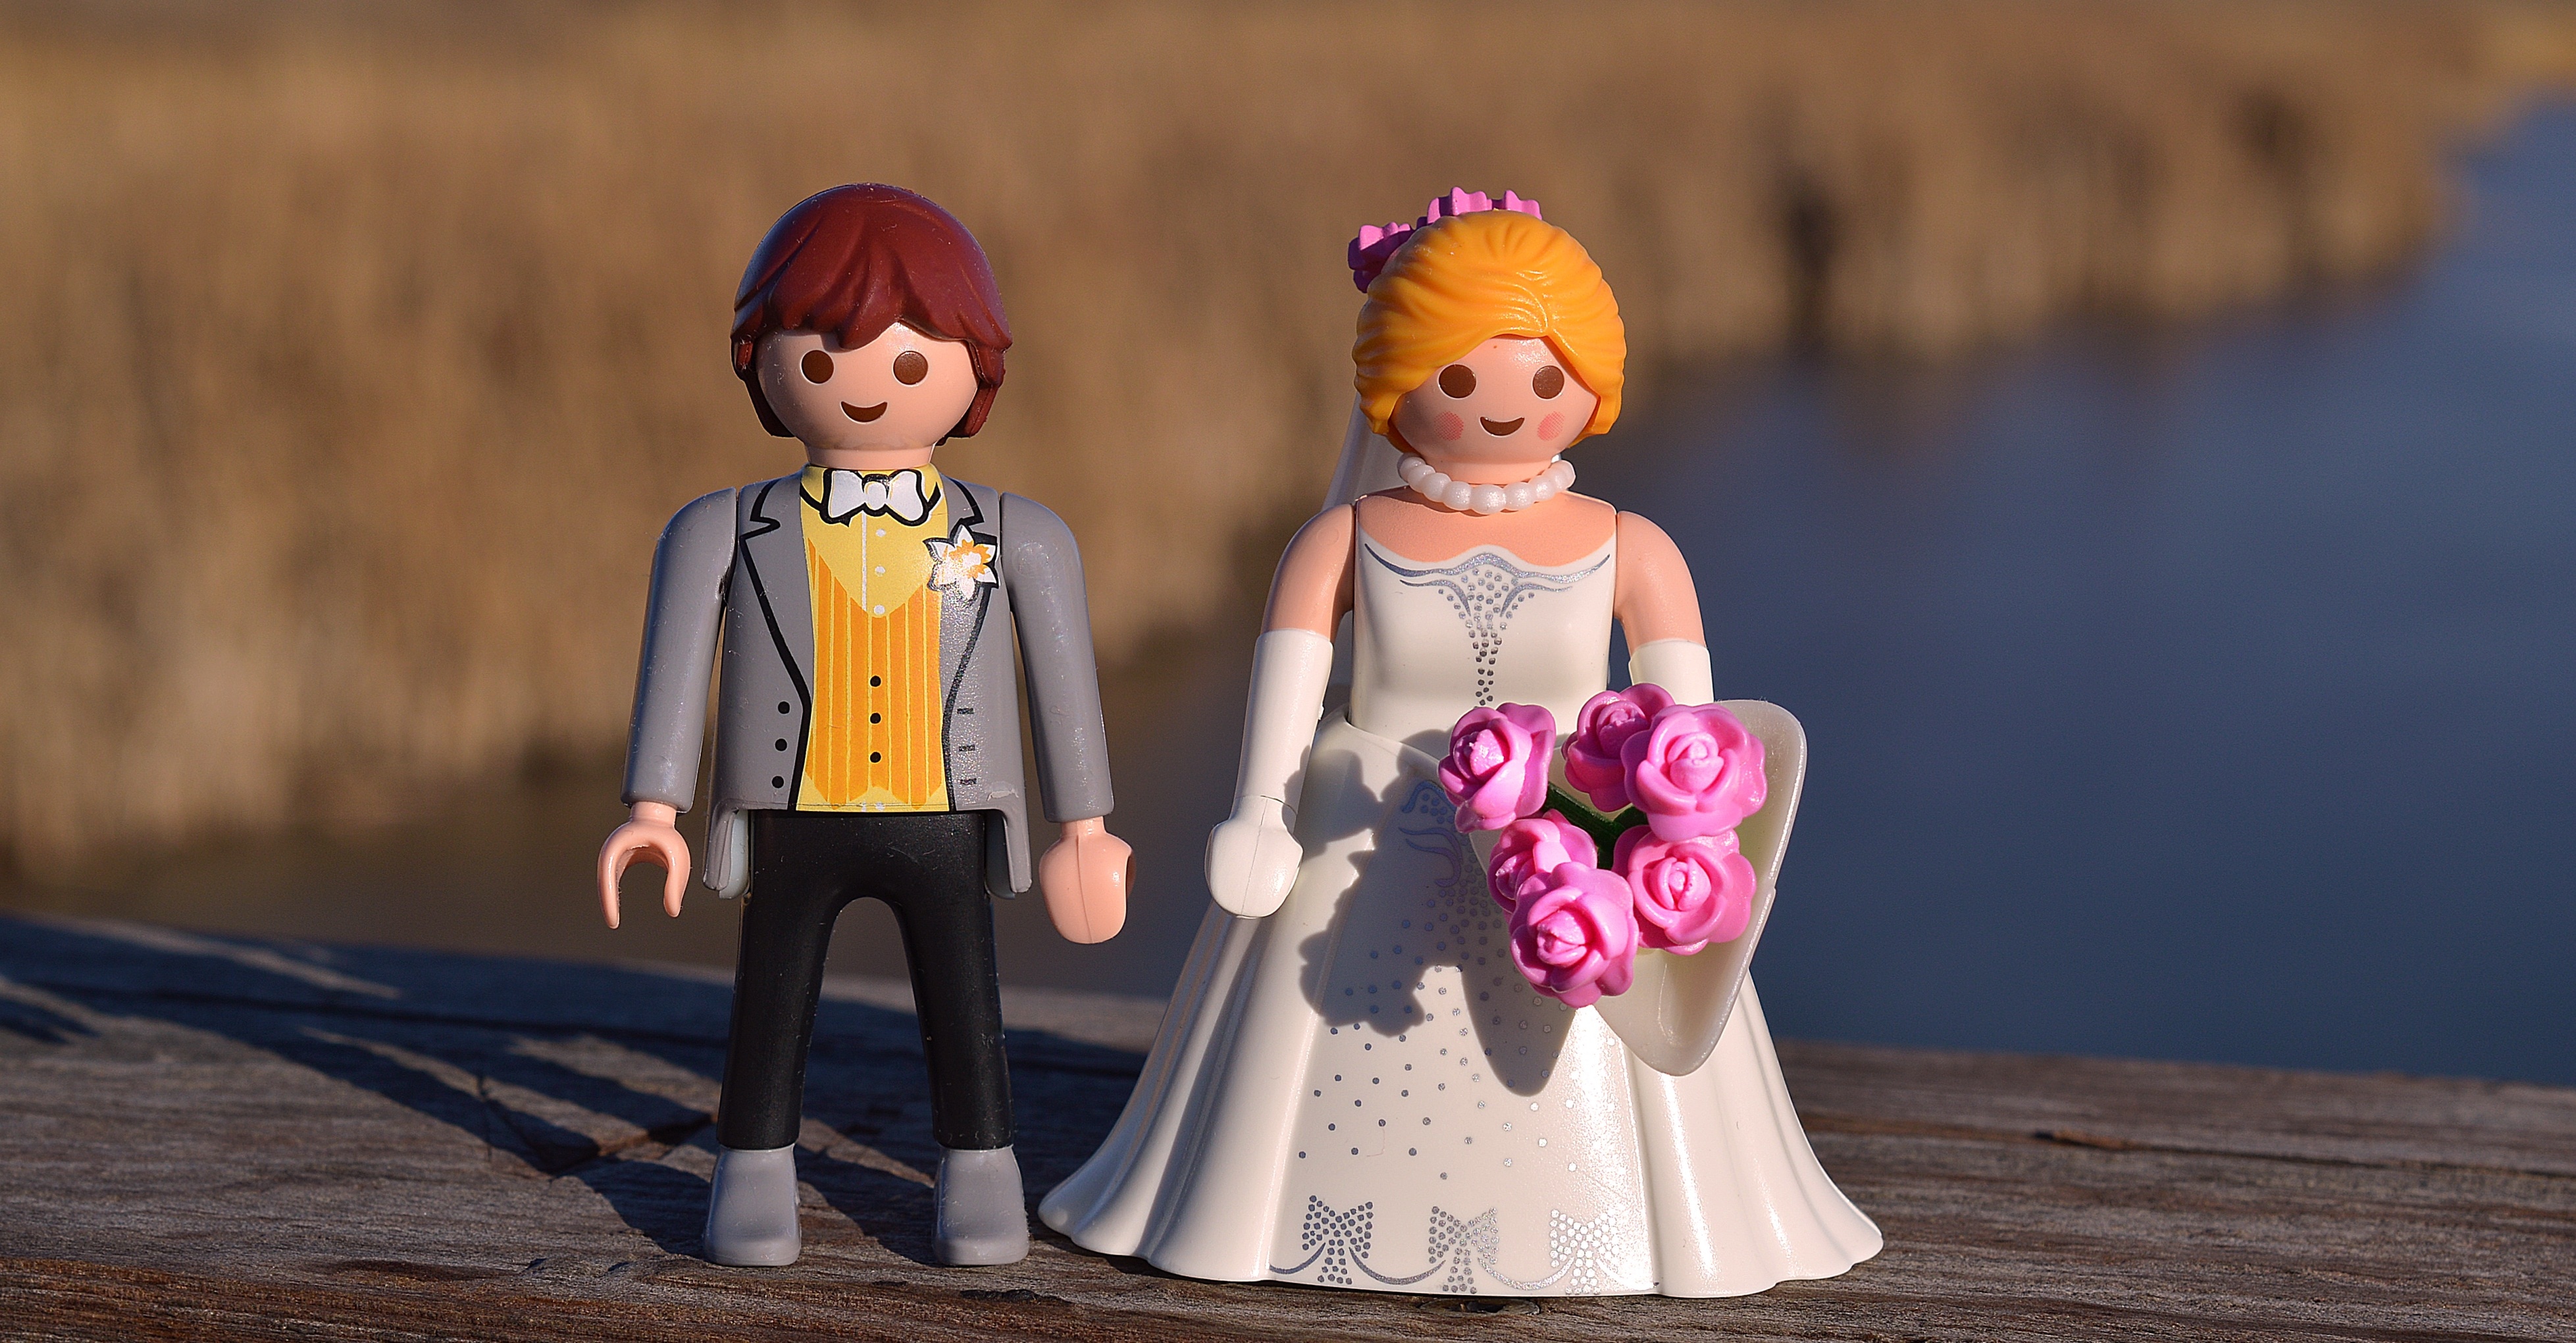 Lego Wedding Couple - Comedy Husband Wife Nonveg Jokes , HD Wallpaper & Backgrounds